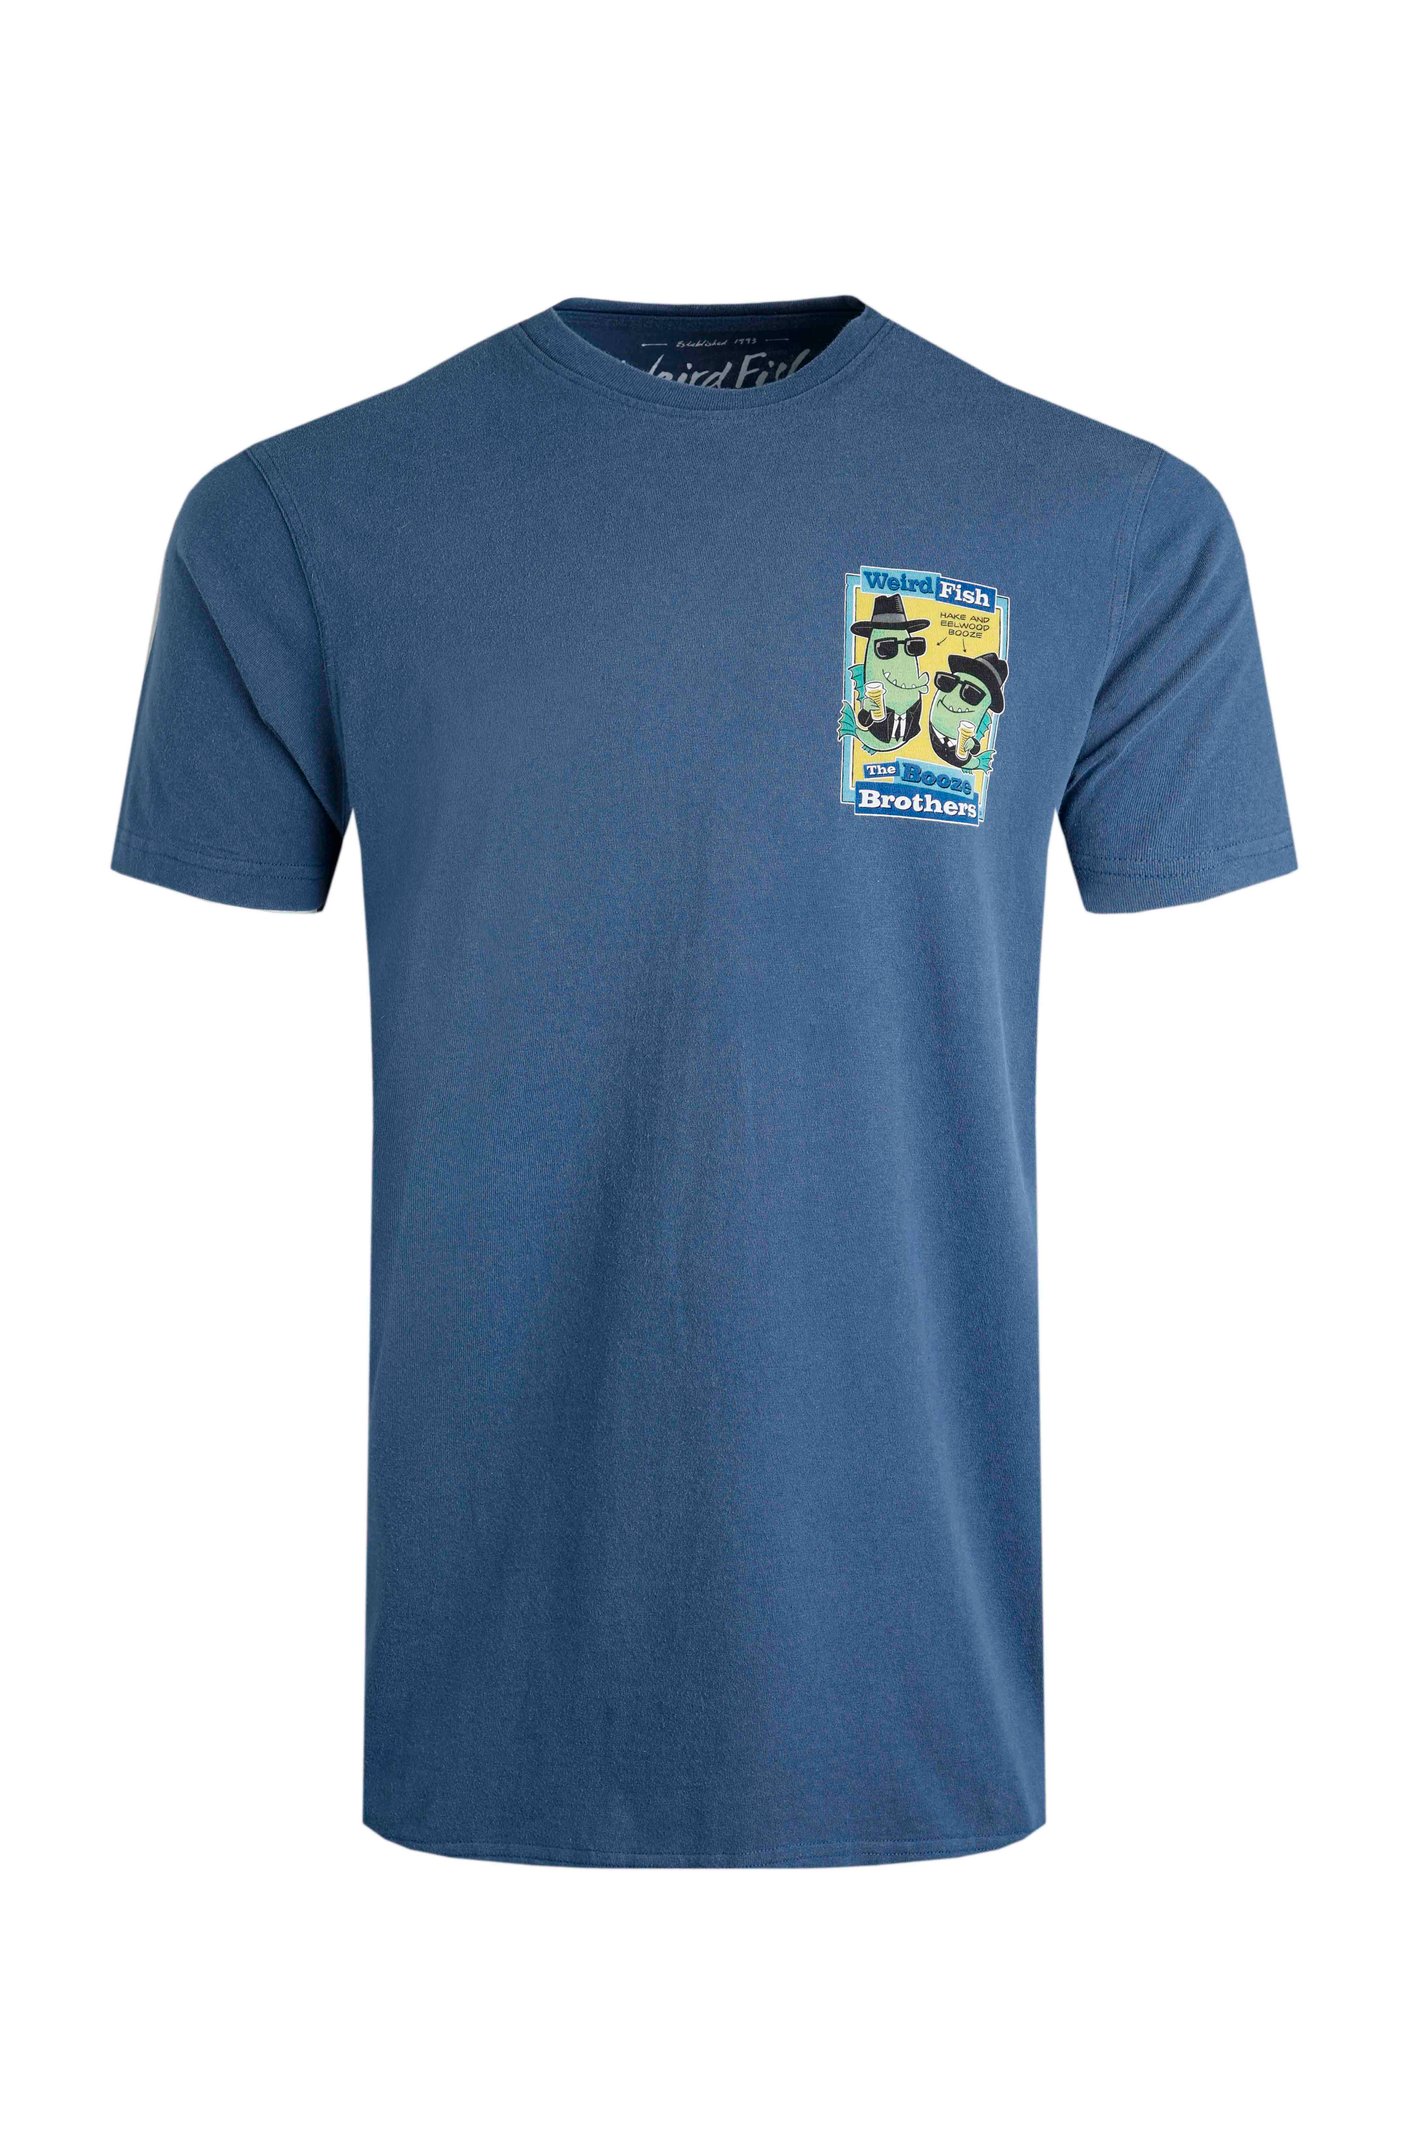 Weird Fish Booze Brothers Artist T-Shirt Ensign Blue Size M